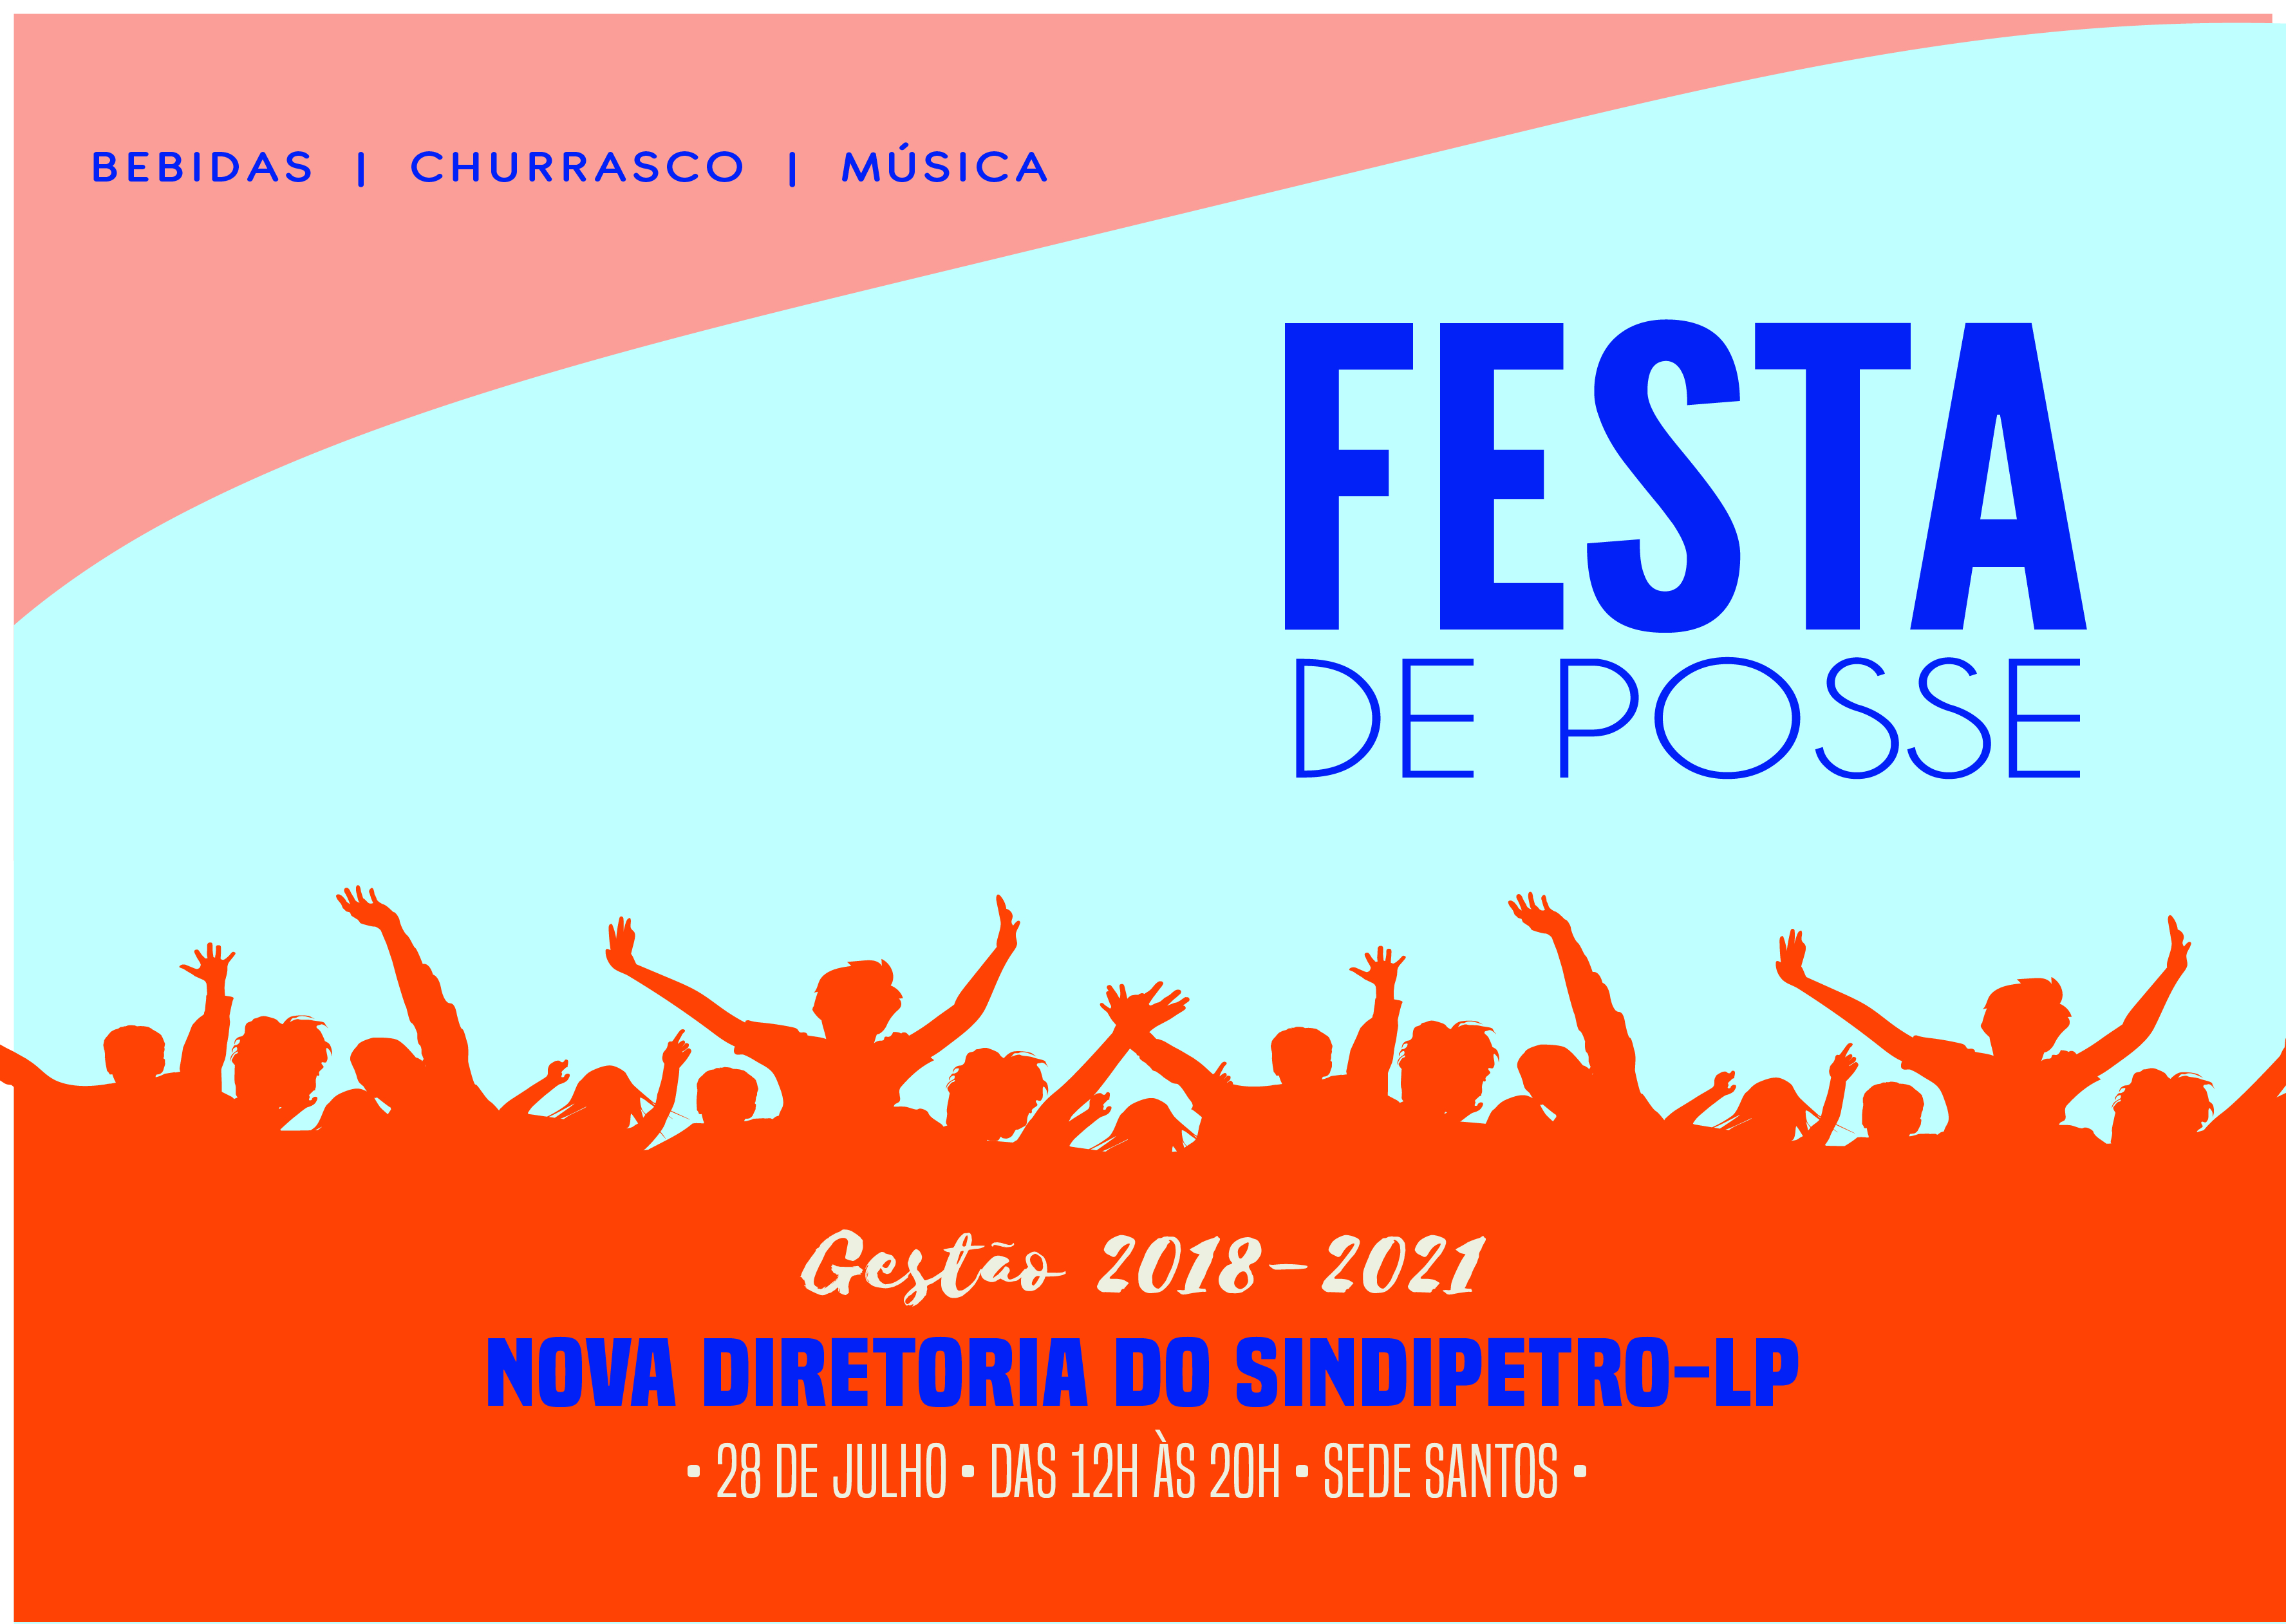 Sindipetro-LP promove festa de  posse no prximo dia 28 de julho